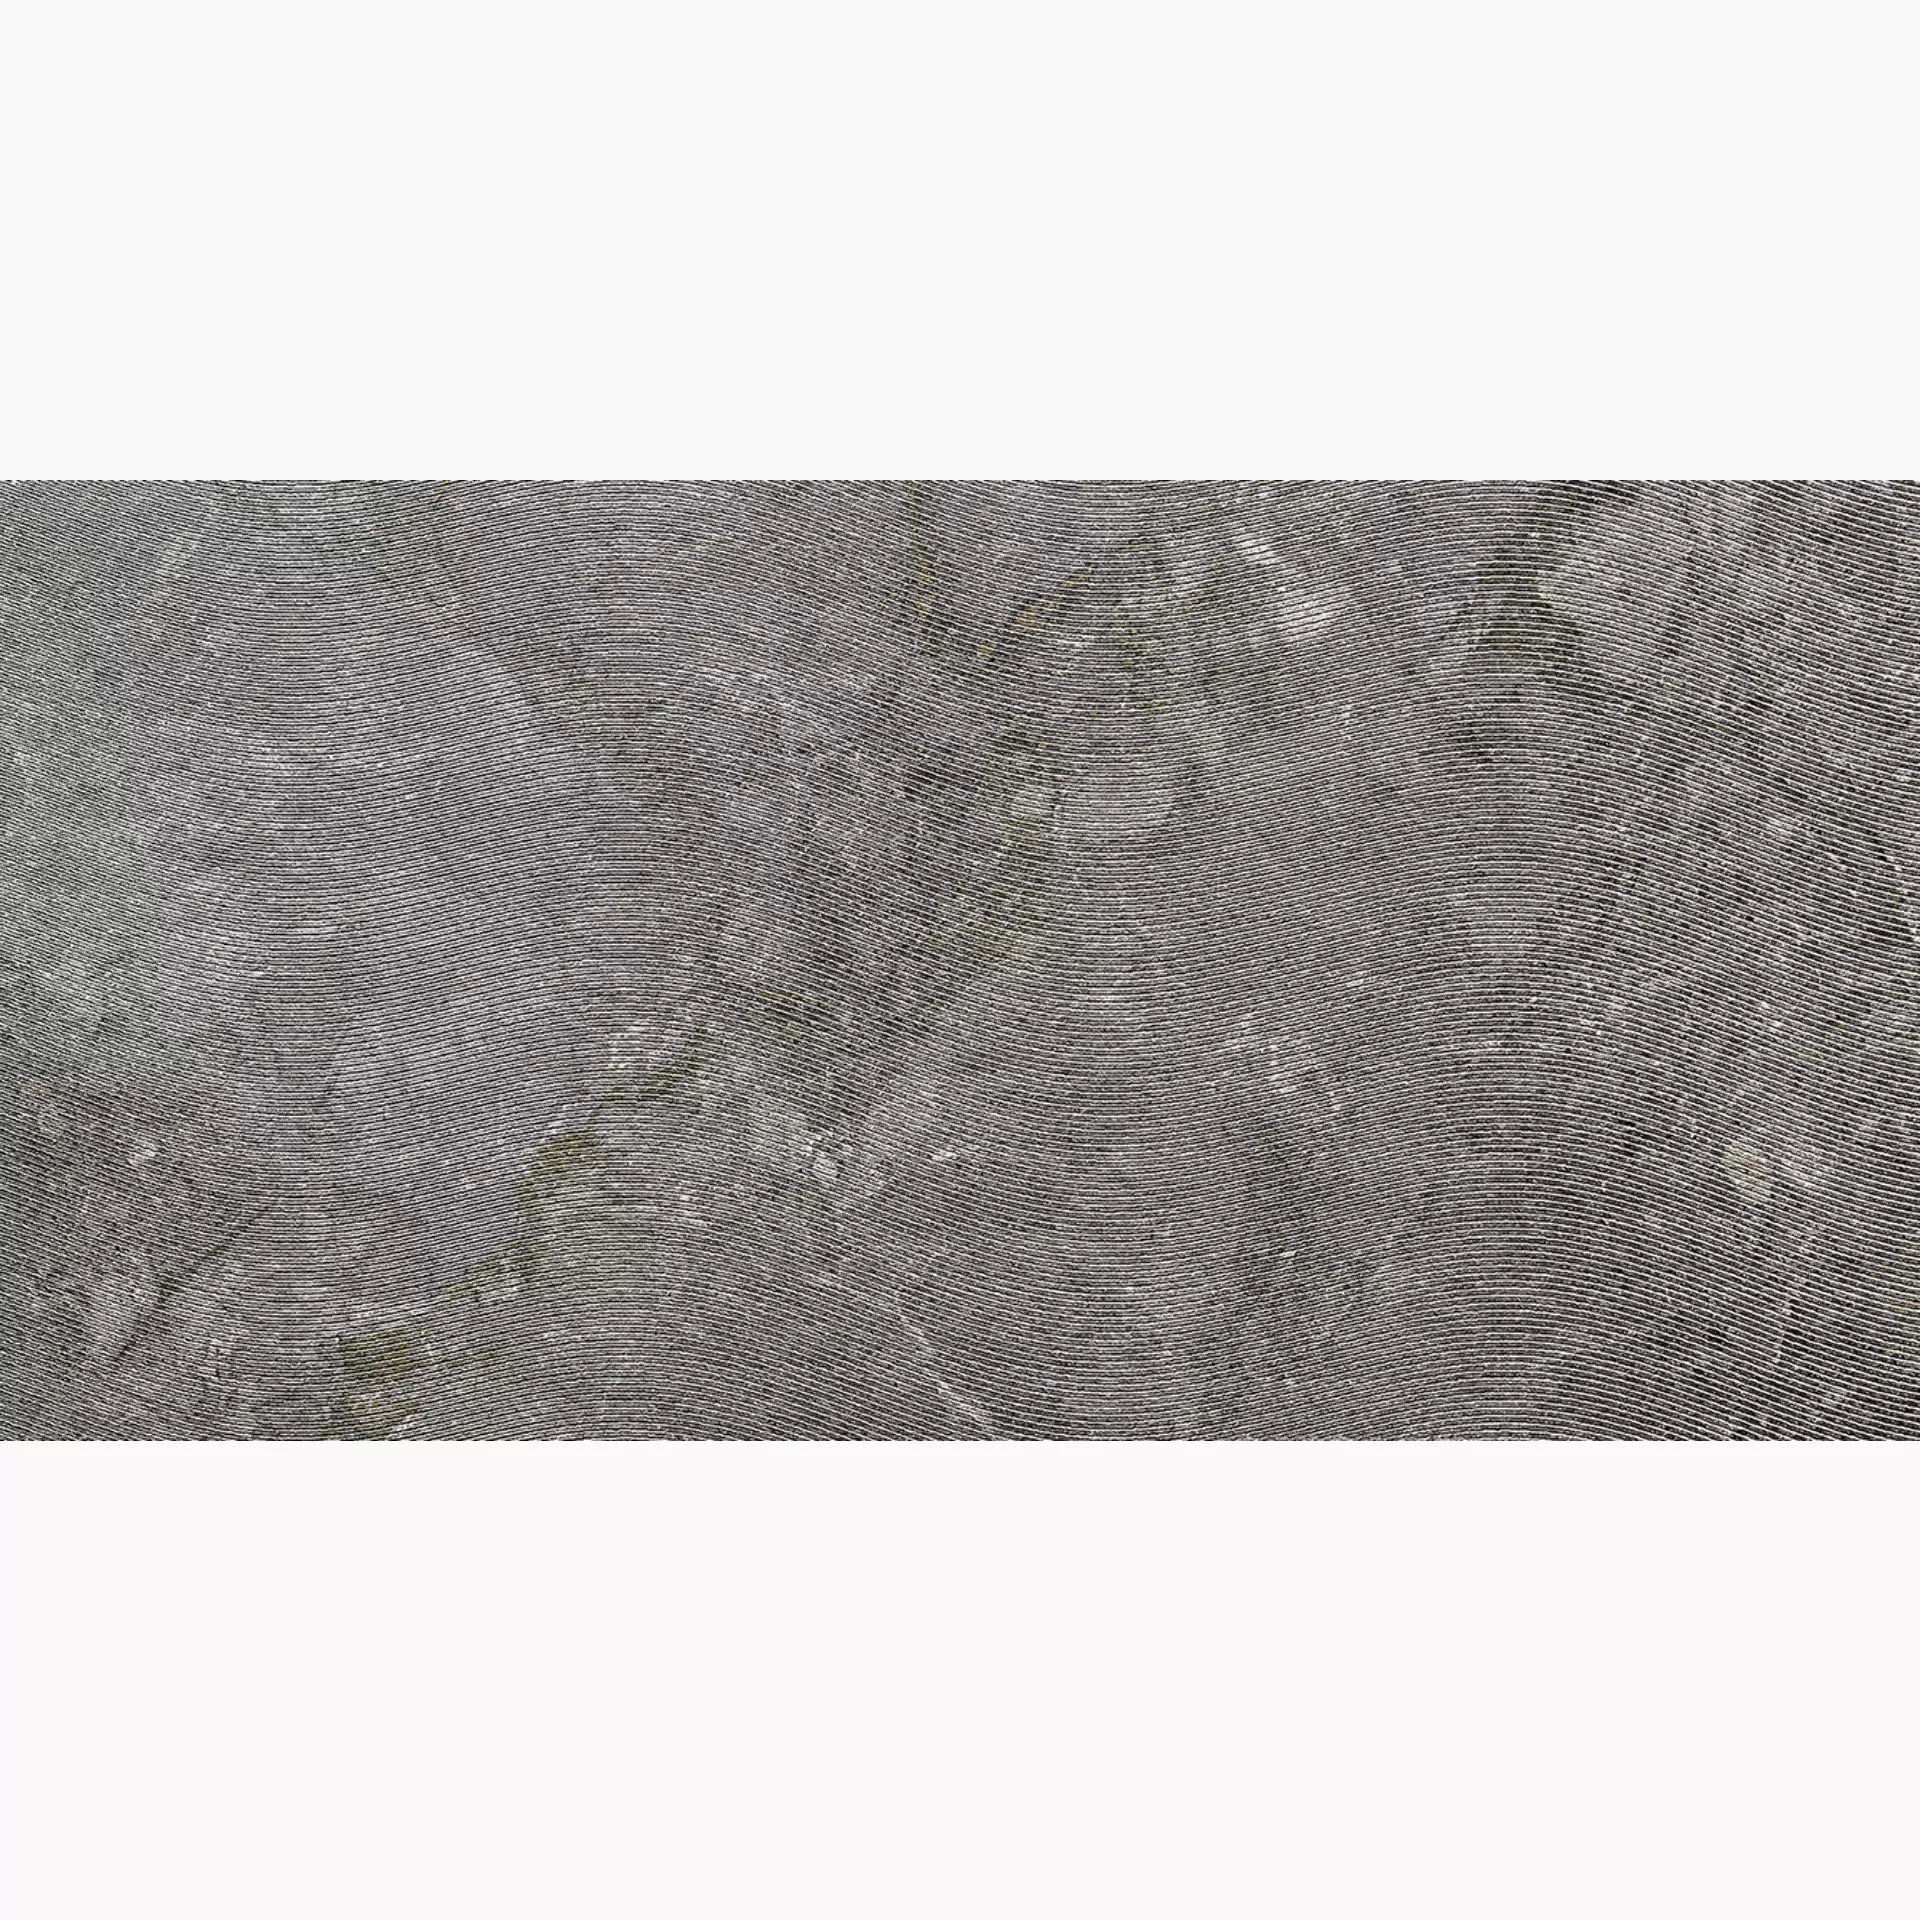 Del Conca Hse Stone Edition Dinamik Breccia Grey Hse Naturale Stories GCSE05STORIR 60x120cm rectified 8,5mm